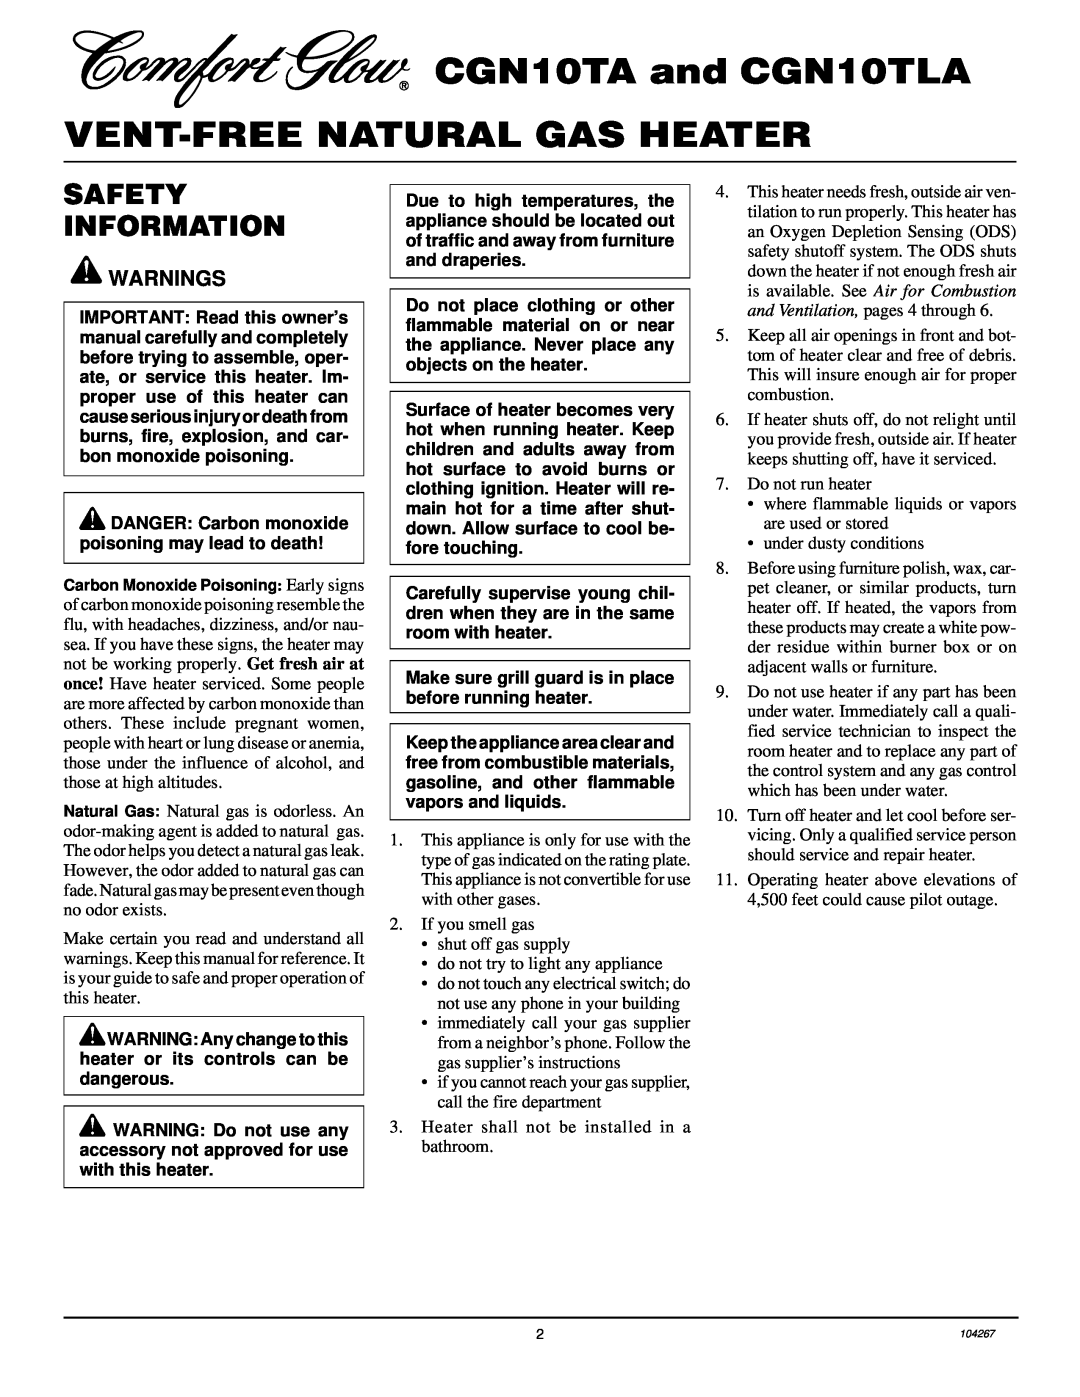 Desa installation manual CGN10TA and CGN10TLA VENT-FREENATURAL GAS HEATER, Safety Information, Warnings 